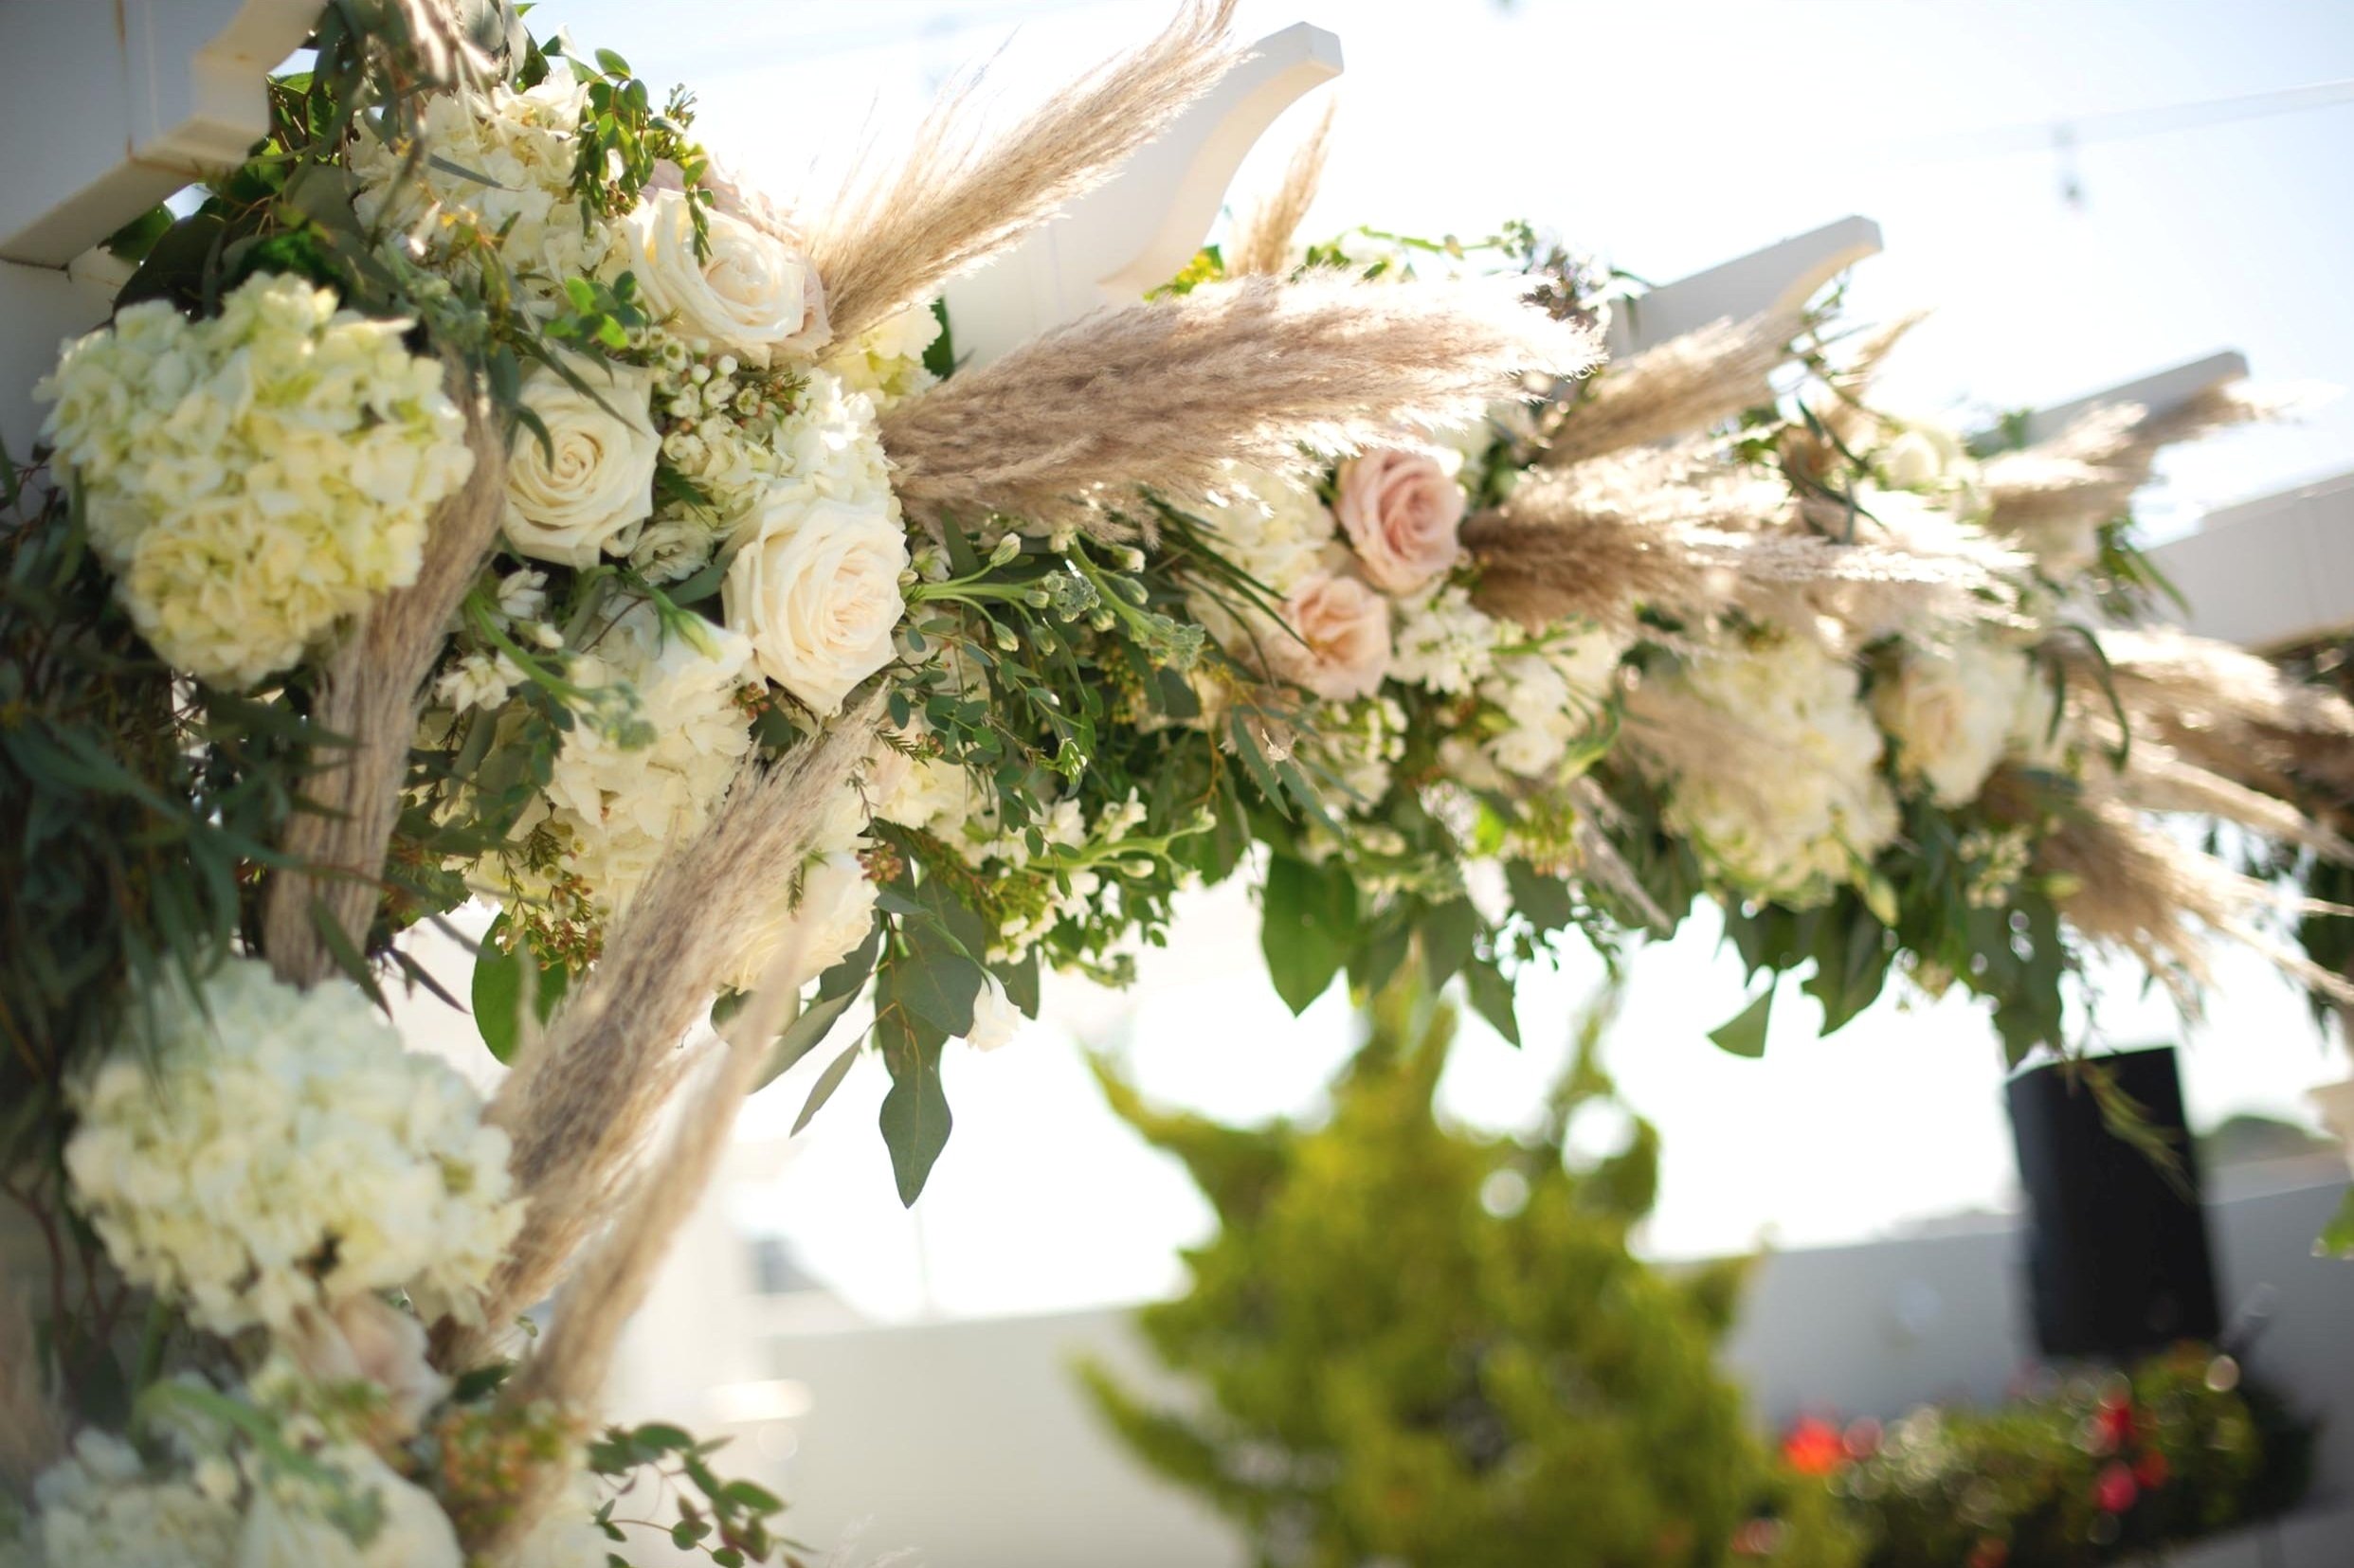 hengstenbergs-florist-weddings-love-story-kyra-michael-%25C2%25A9SilverfoxStudios-002.jpg